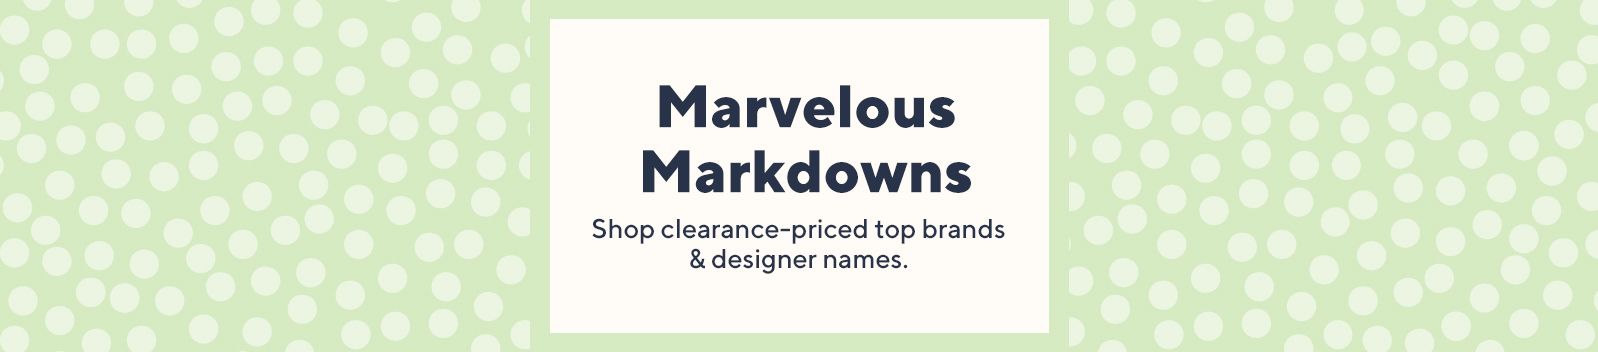 Marvelous Markdowns  Shop clearance-priced top brands & designer names.